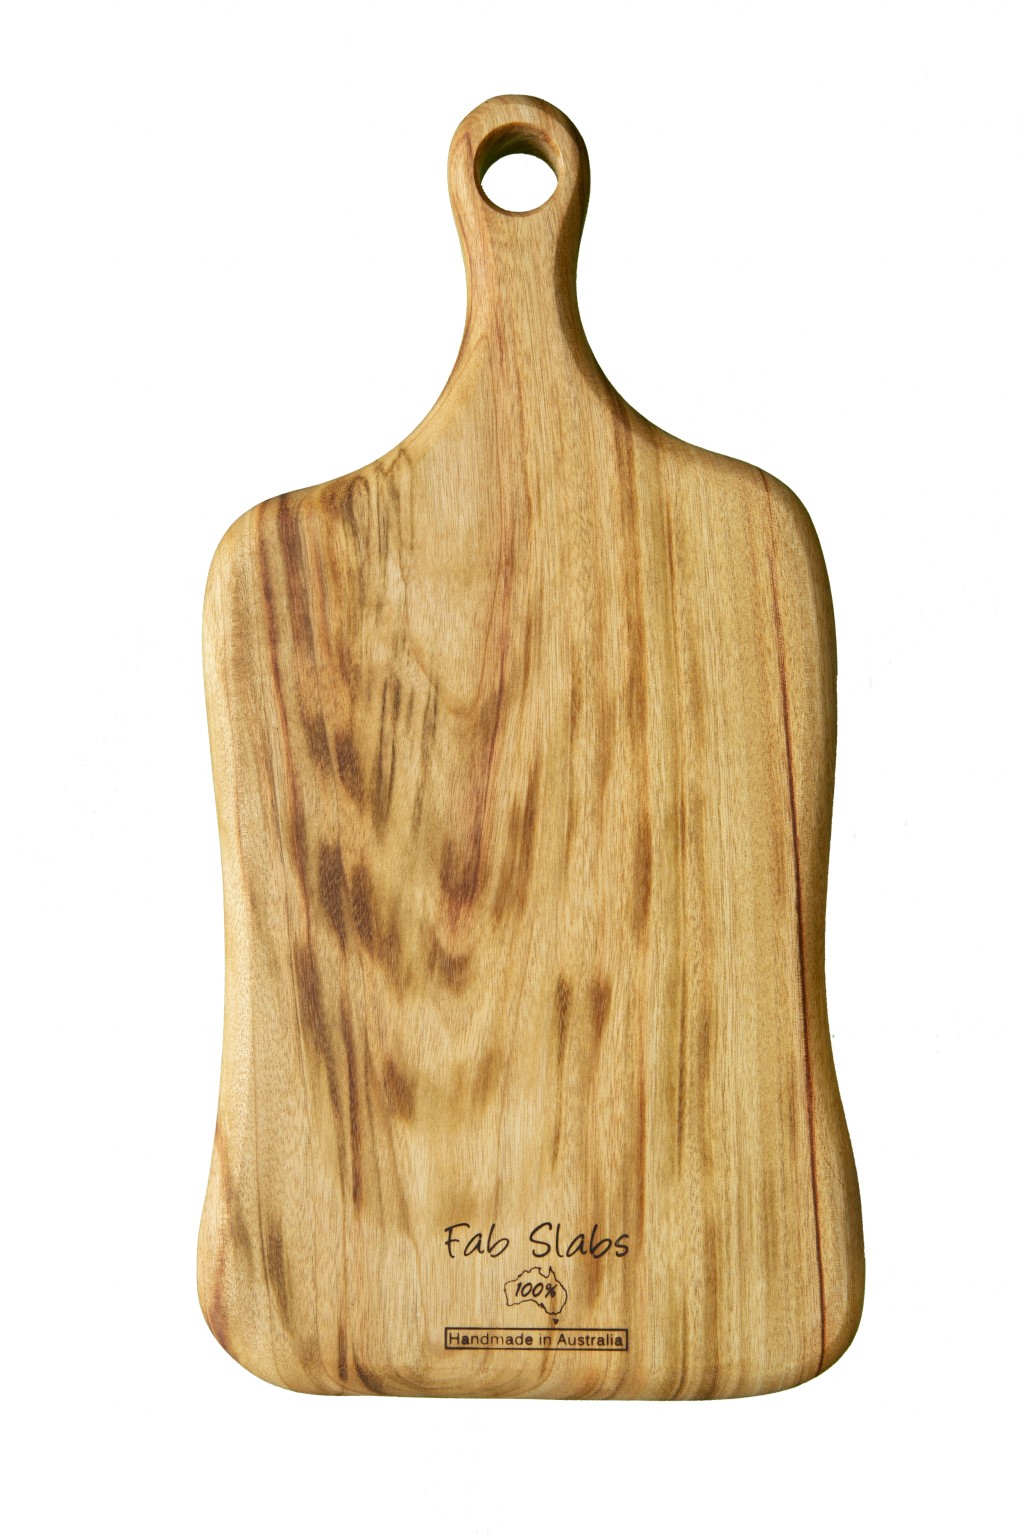 Artisan Organic Edge Anti Bacterial Wood Paddle Board-469162-1